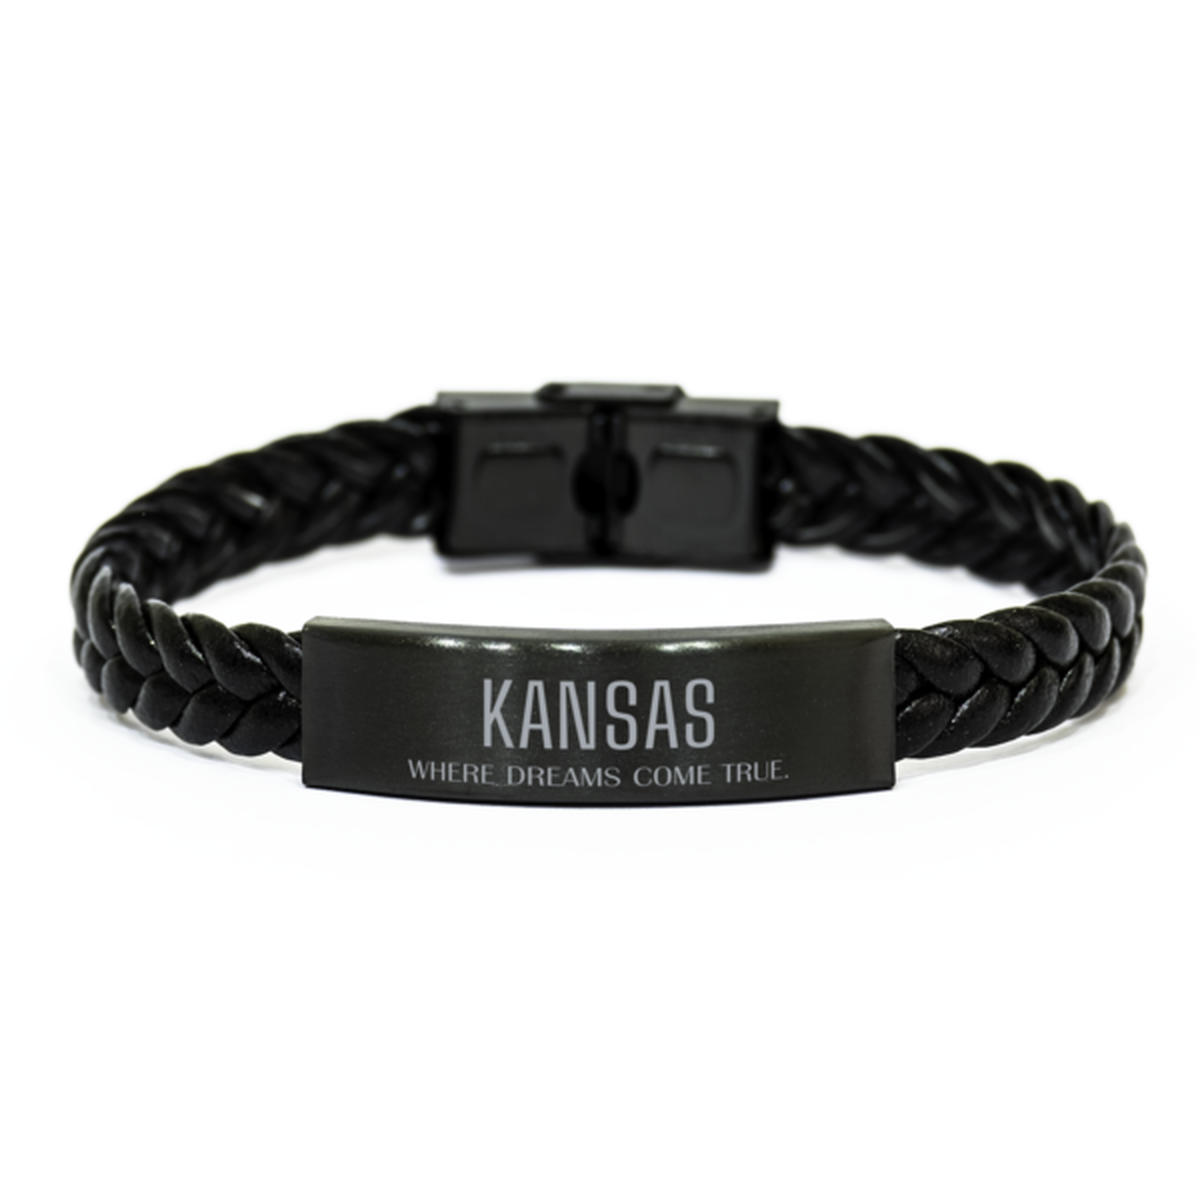 Love Kansas State Braided Leather Bracelet, Kansas Where dreams come true, Birthday Inspirational Gifts For Kansas Men, Women, Friends